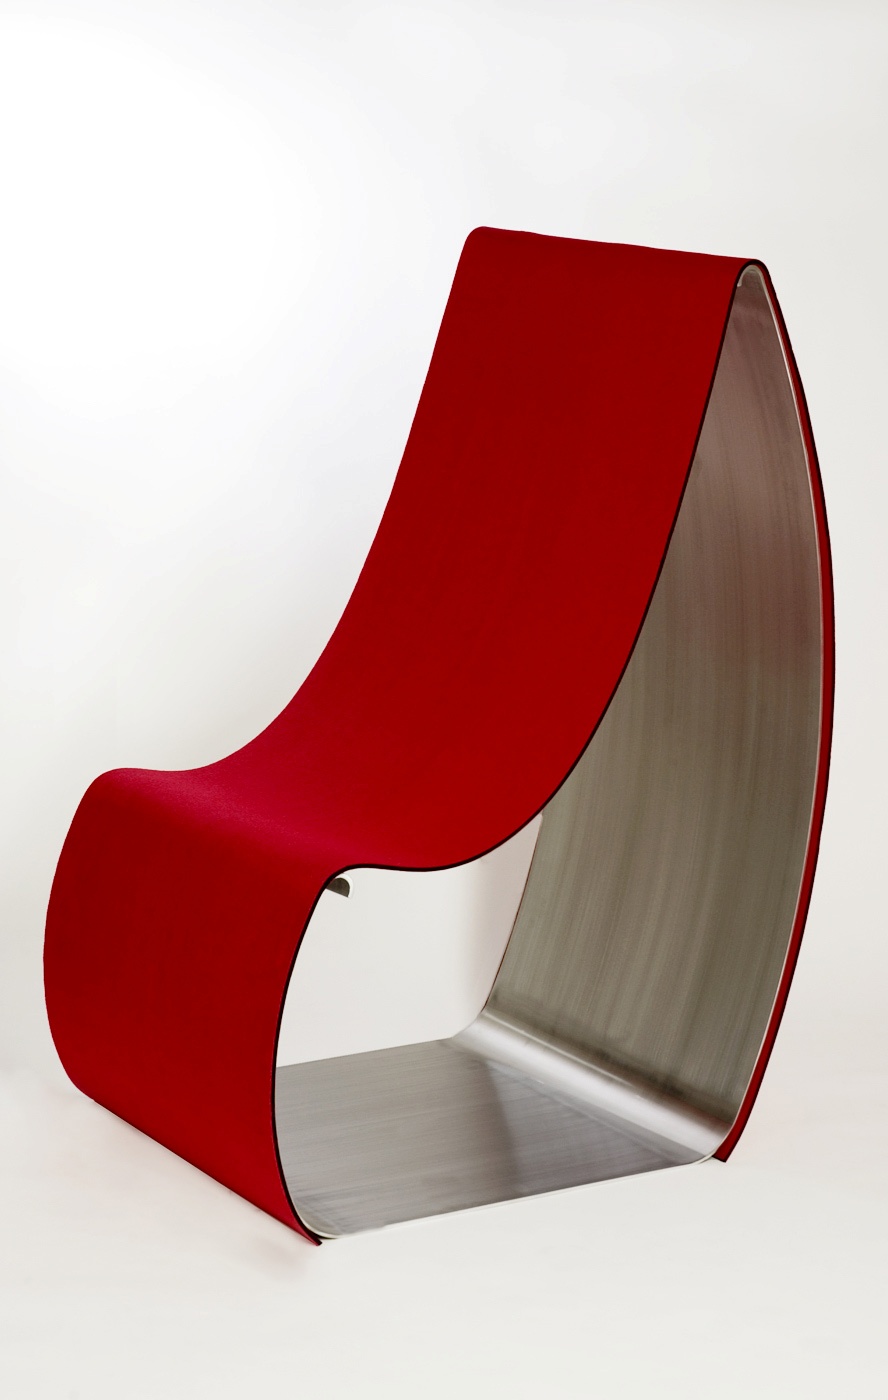 The Flex Chair by Steve Watson